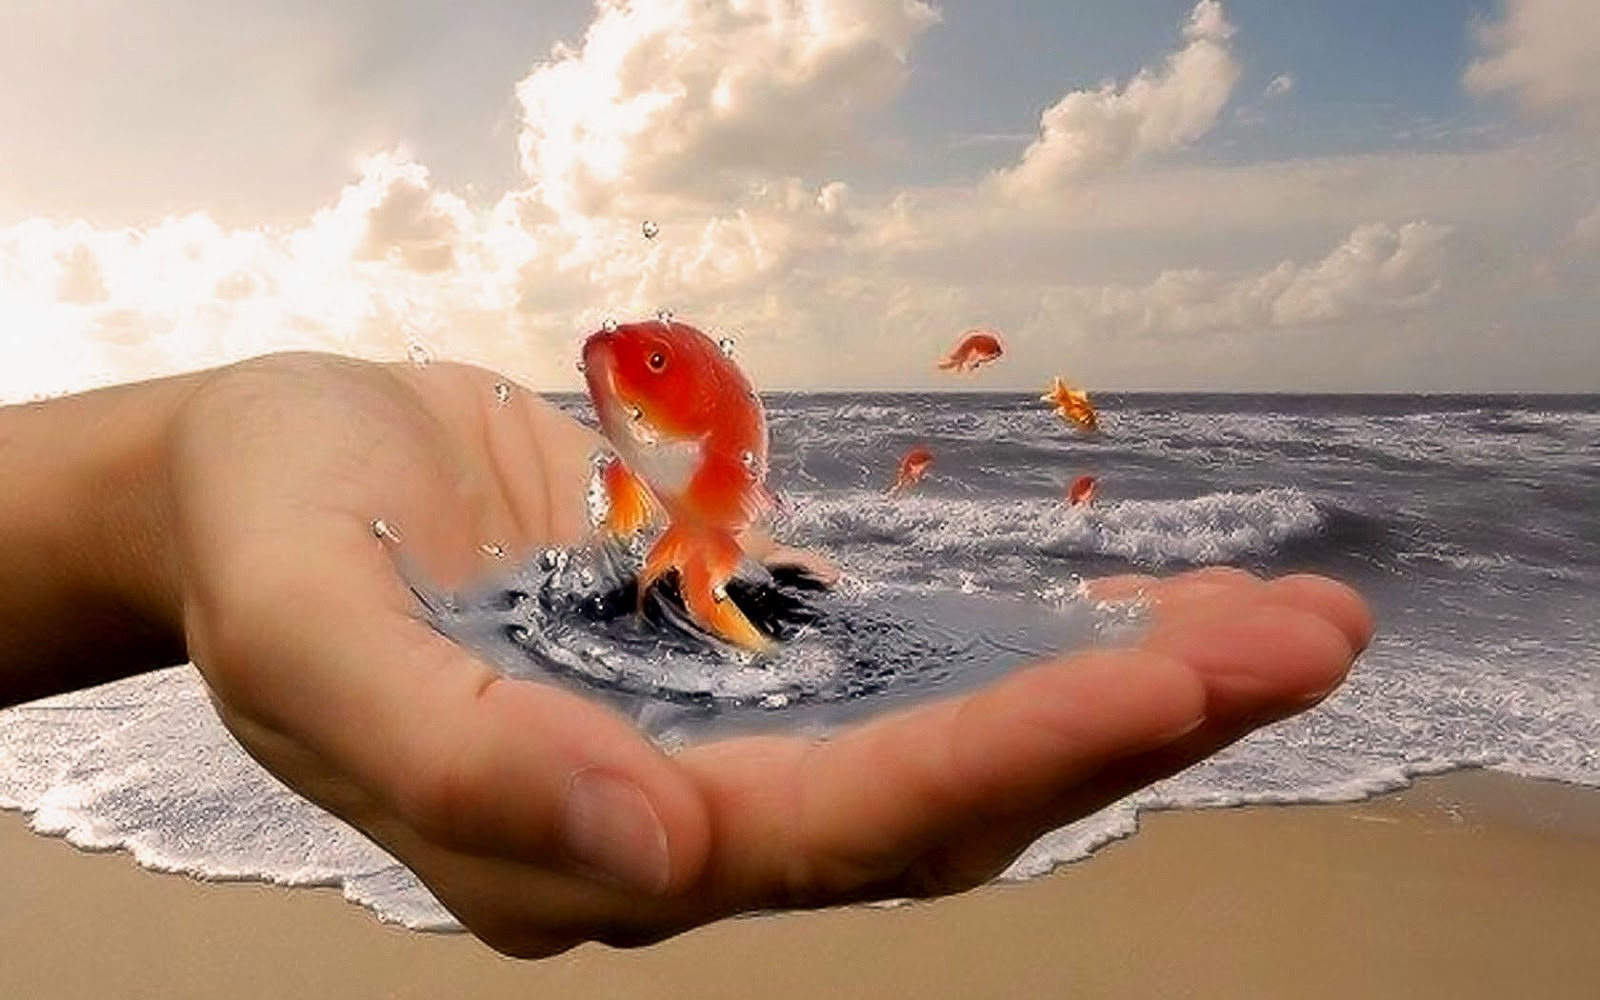 Мы дарим людям. Золотая рыбка в руках. Золотая рыбка исполнение желаний. Добро у моря. Золотая рыбка исполняет желания.